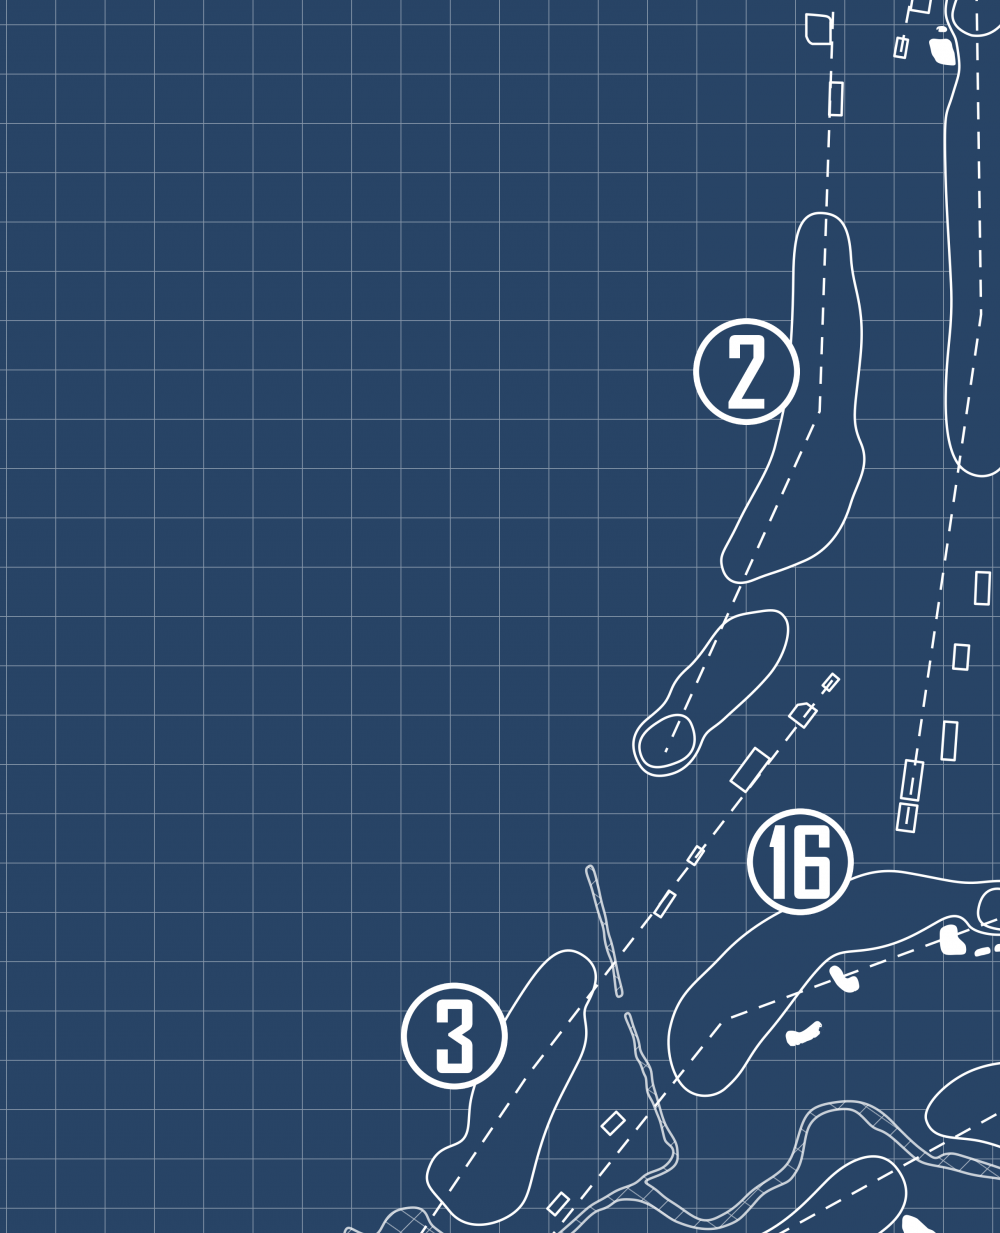 Linville Golf Club Blueprint (Print)